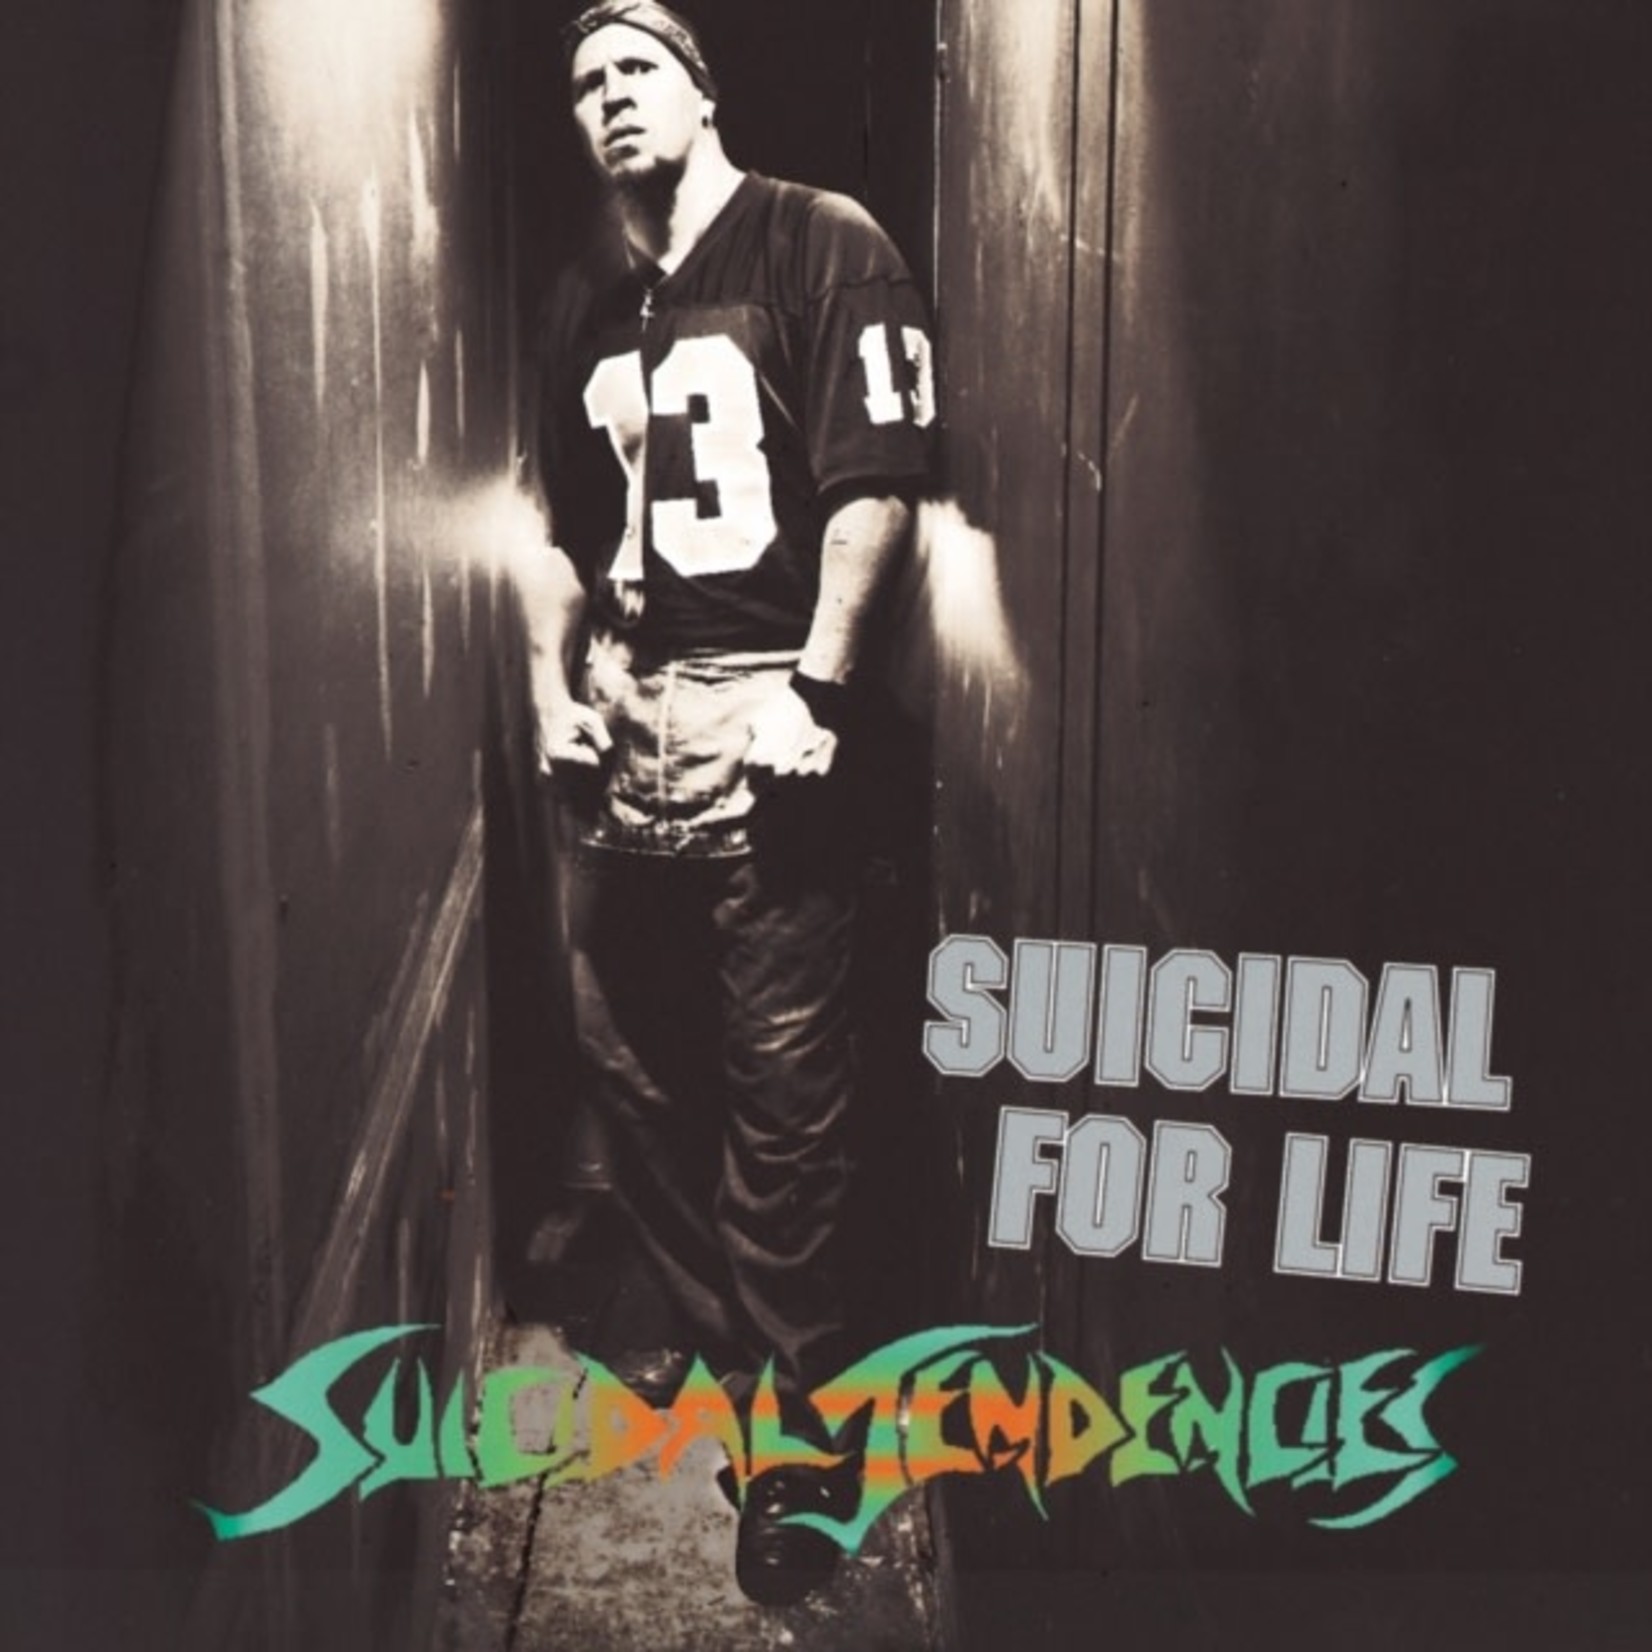 Suicidal Tendencies - Suicidal For Life [CD]